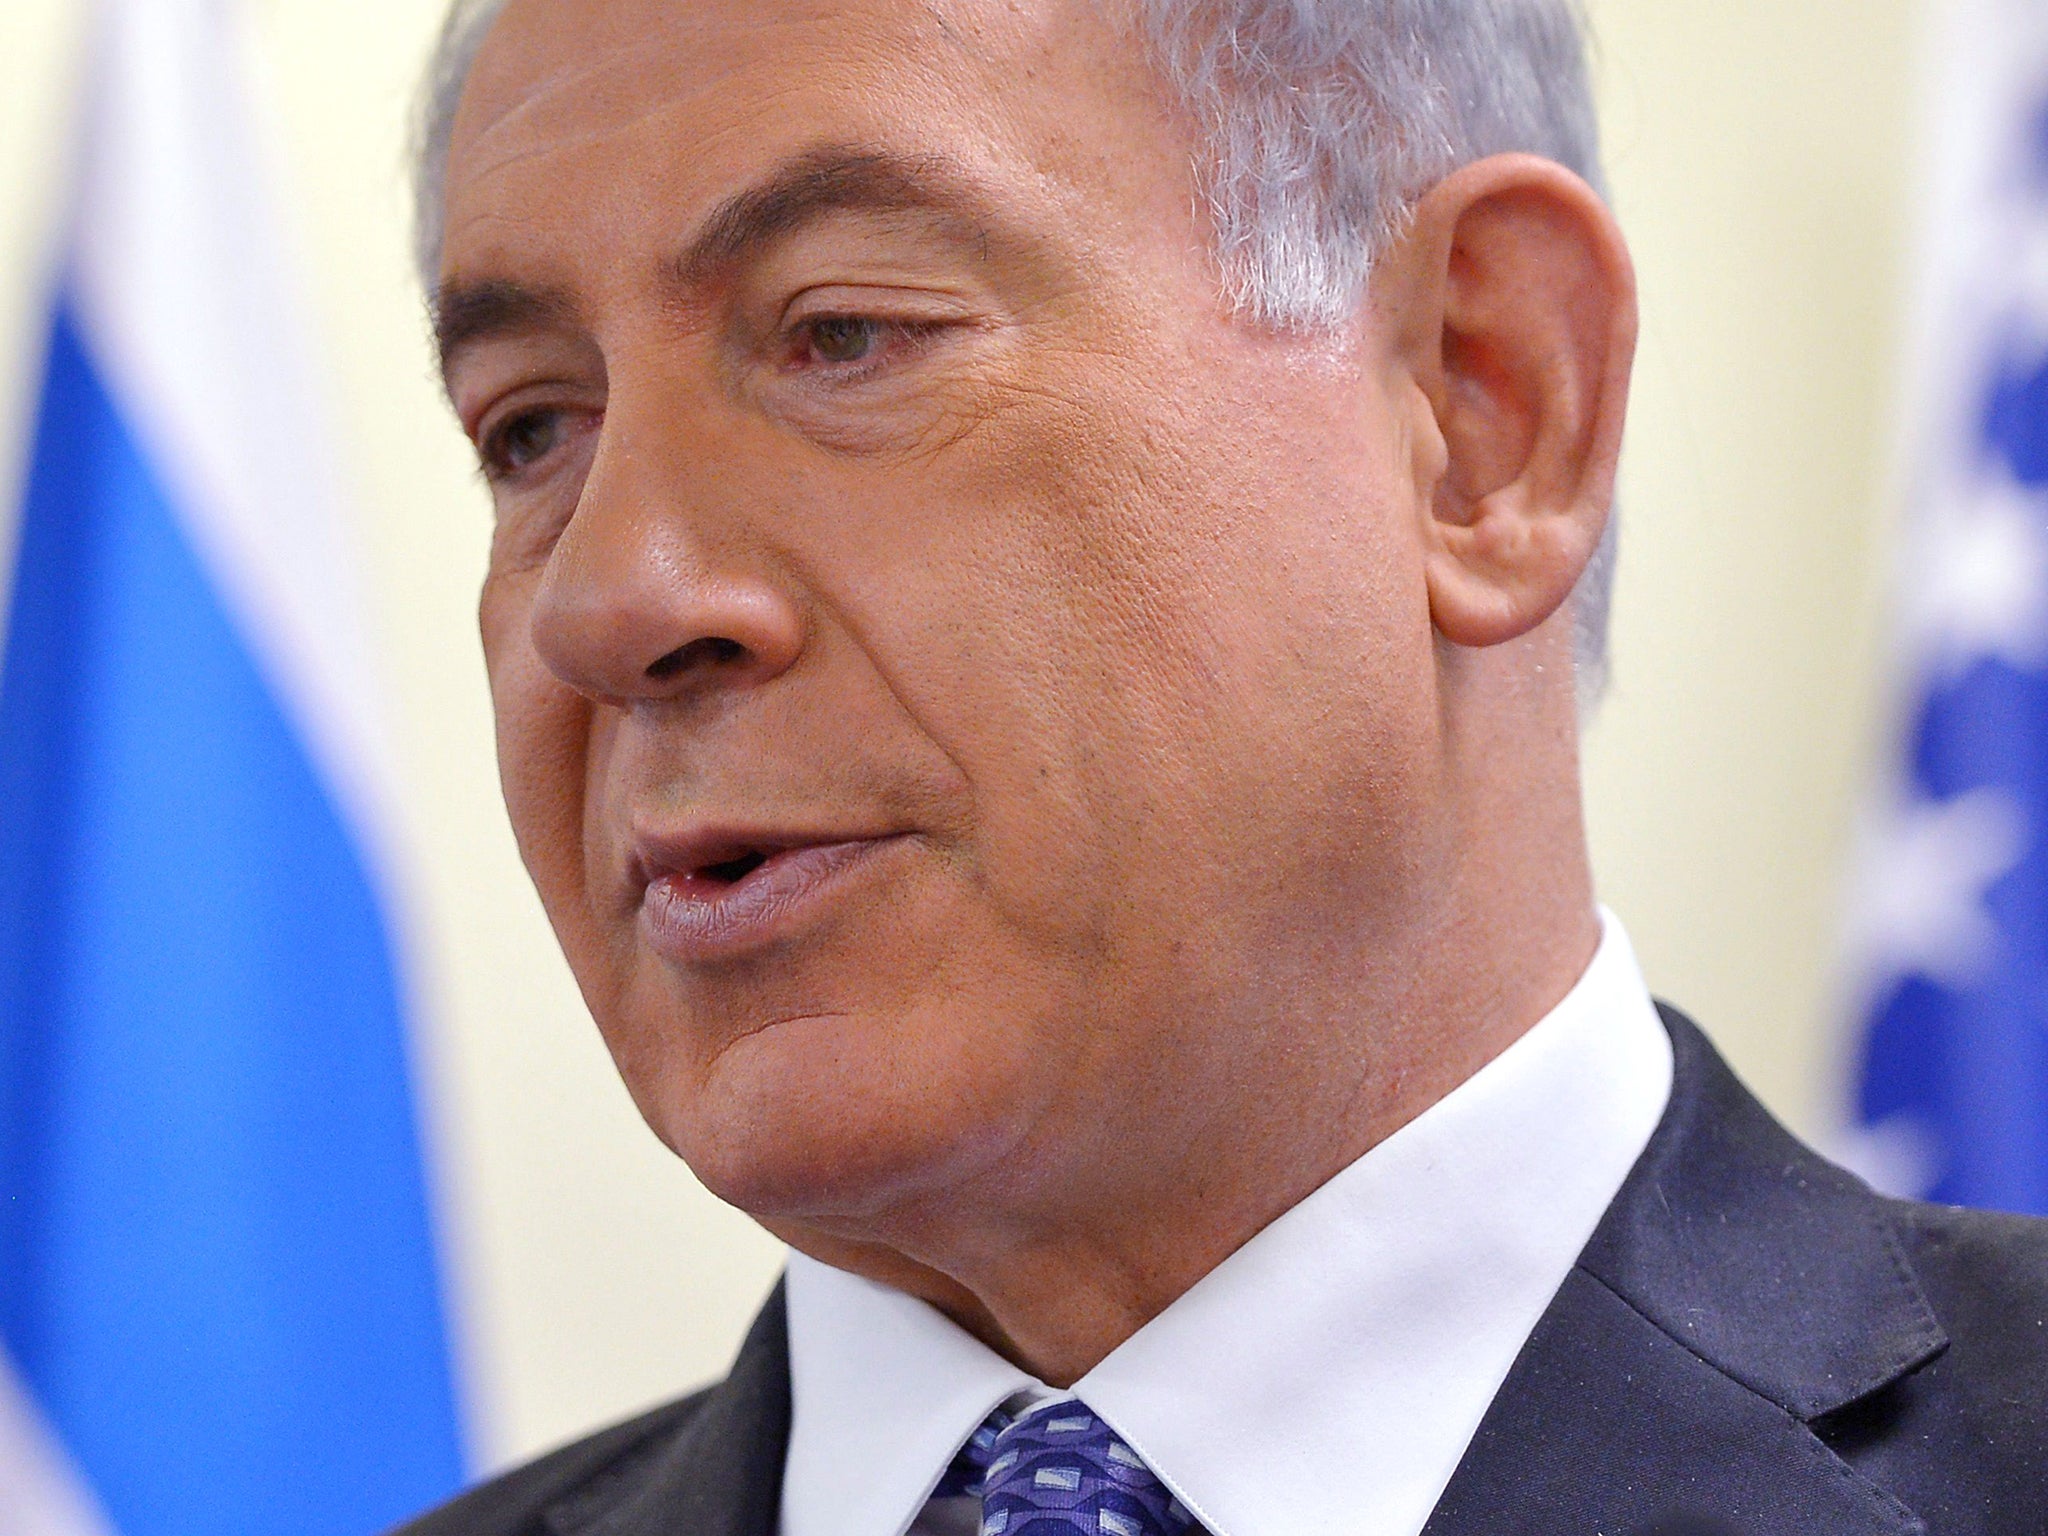 Israeli Prime Minister Benjamin Netanyahu blamed the Palestinian President, Mahmoud Abbas, for the attack